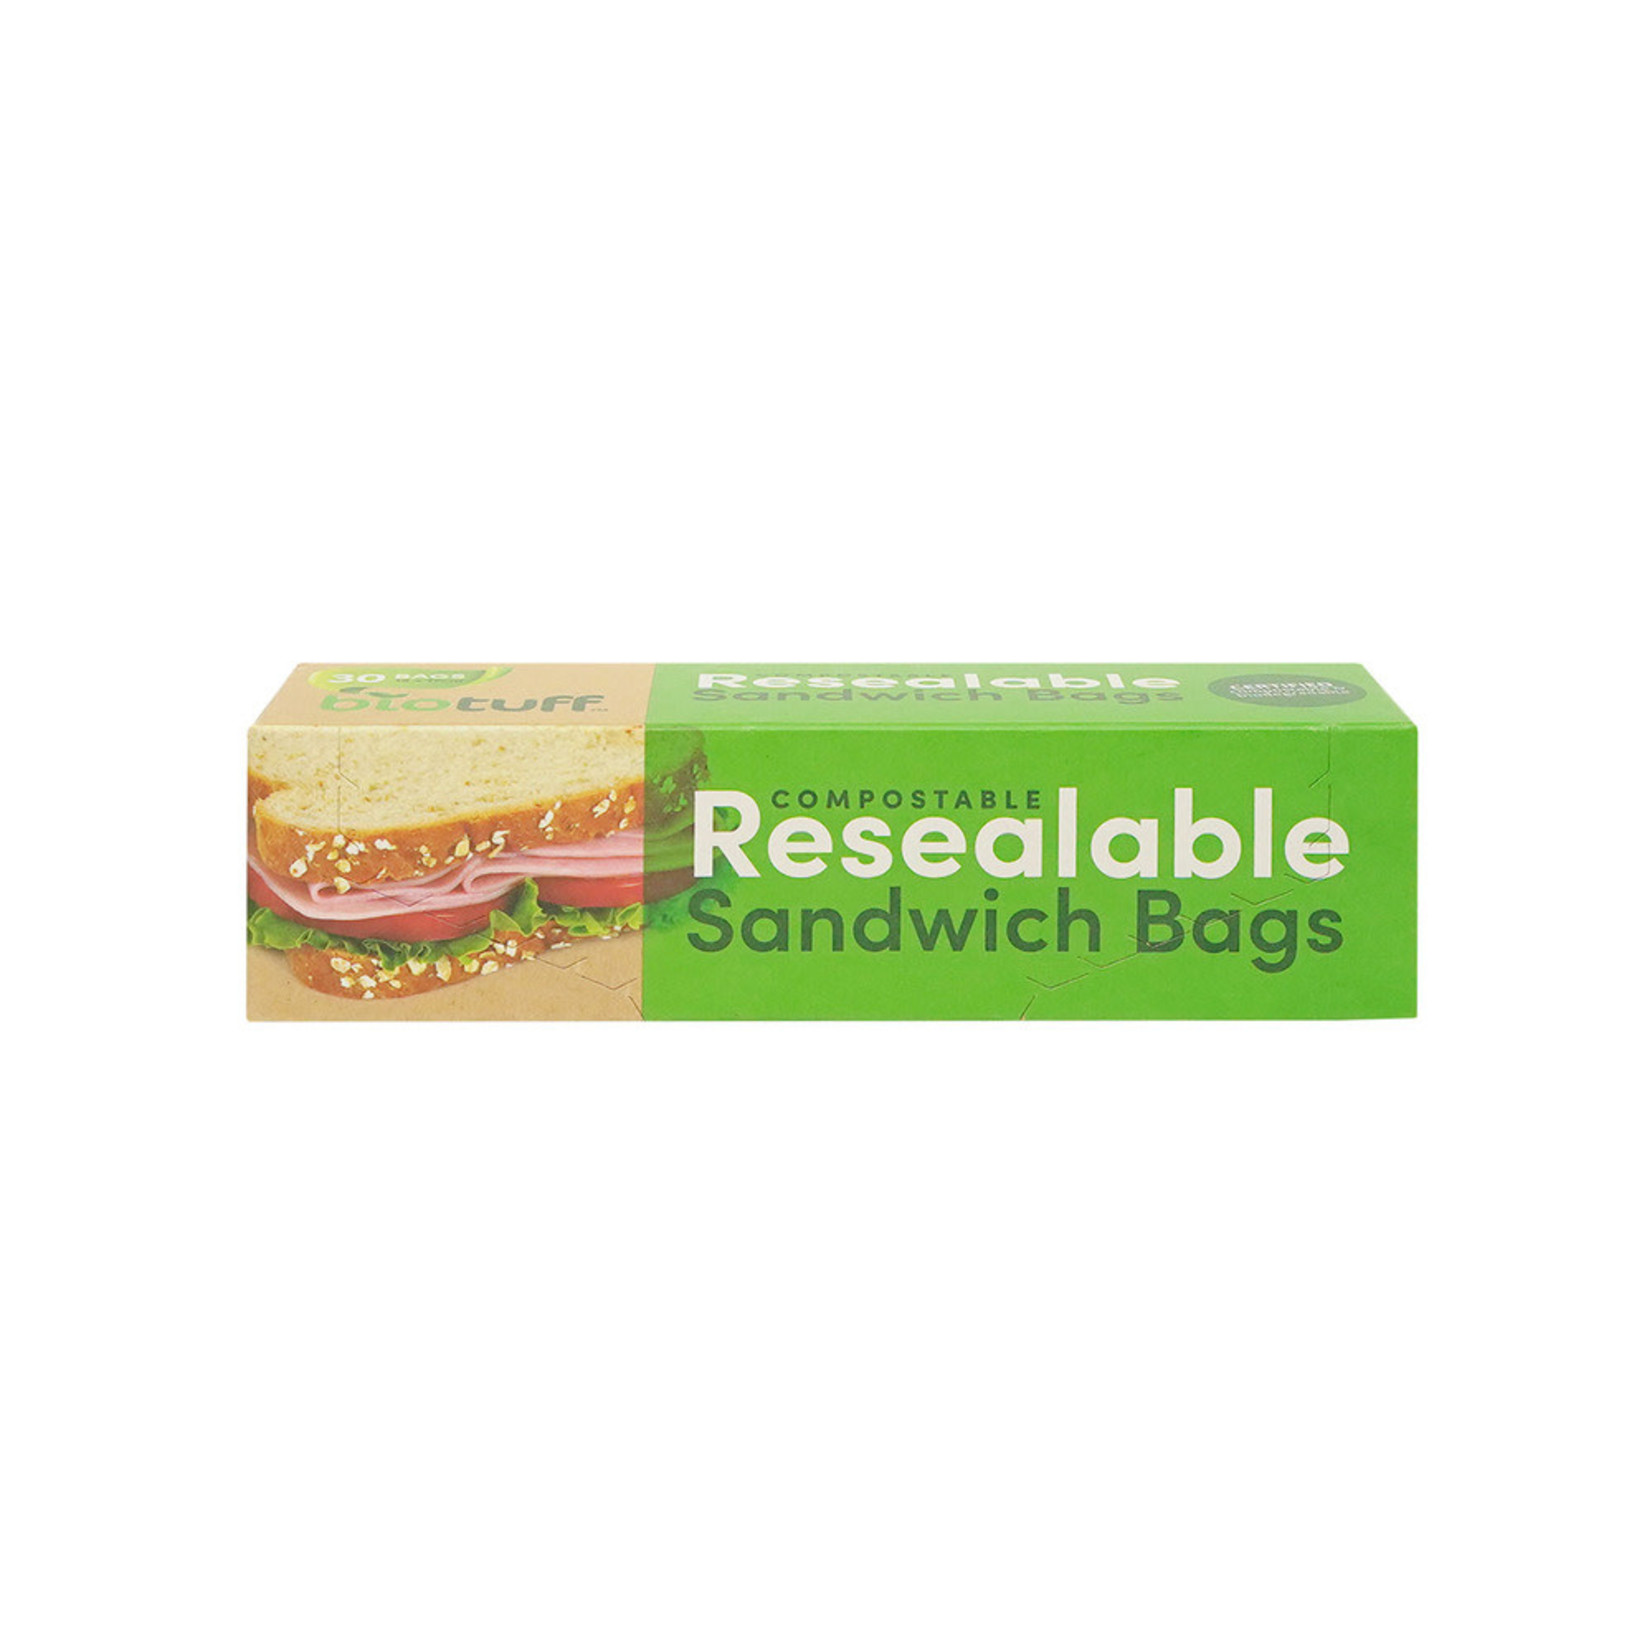 Biotuff Biotuff Compostable Resealable Sandwich Bags